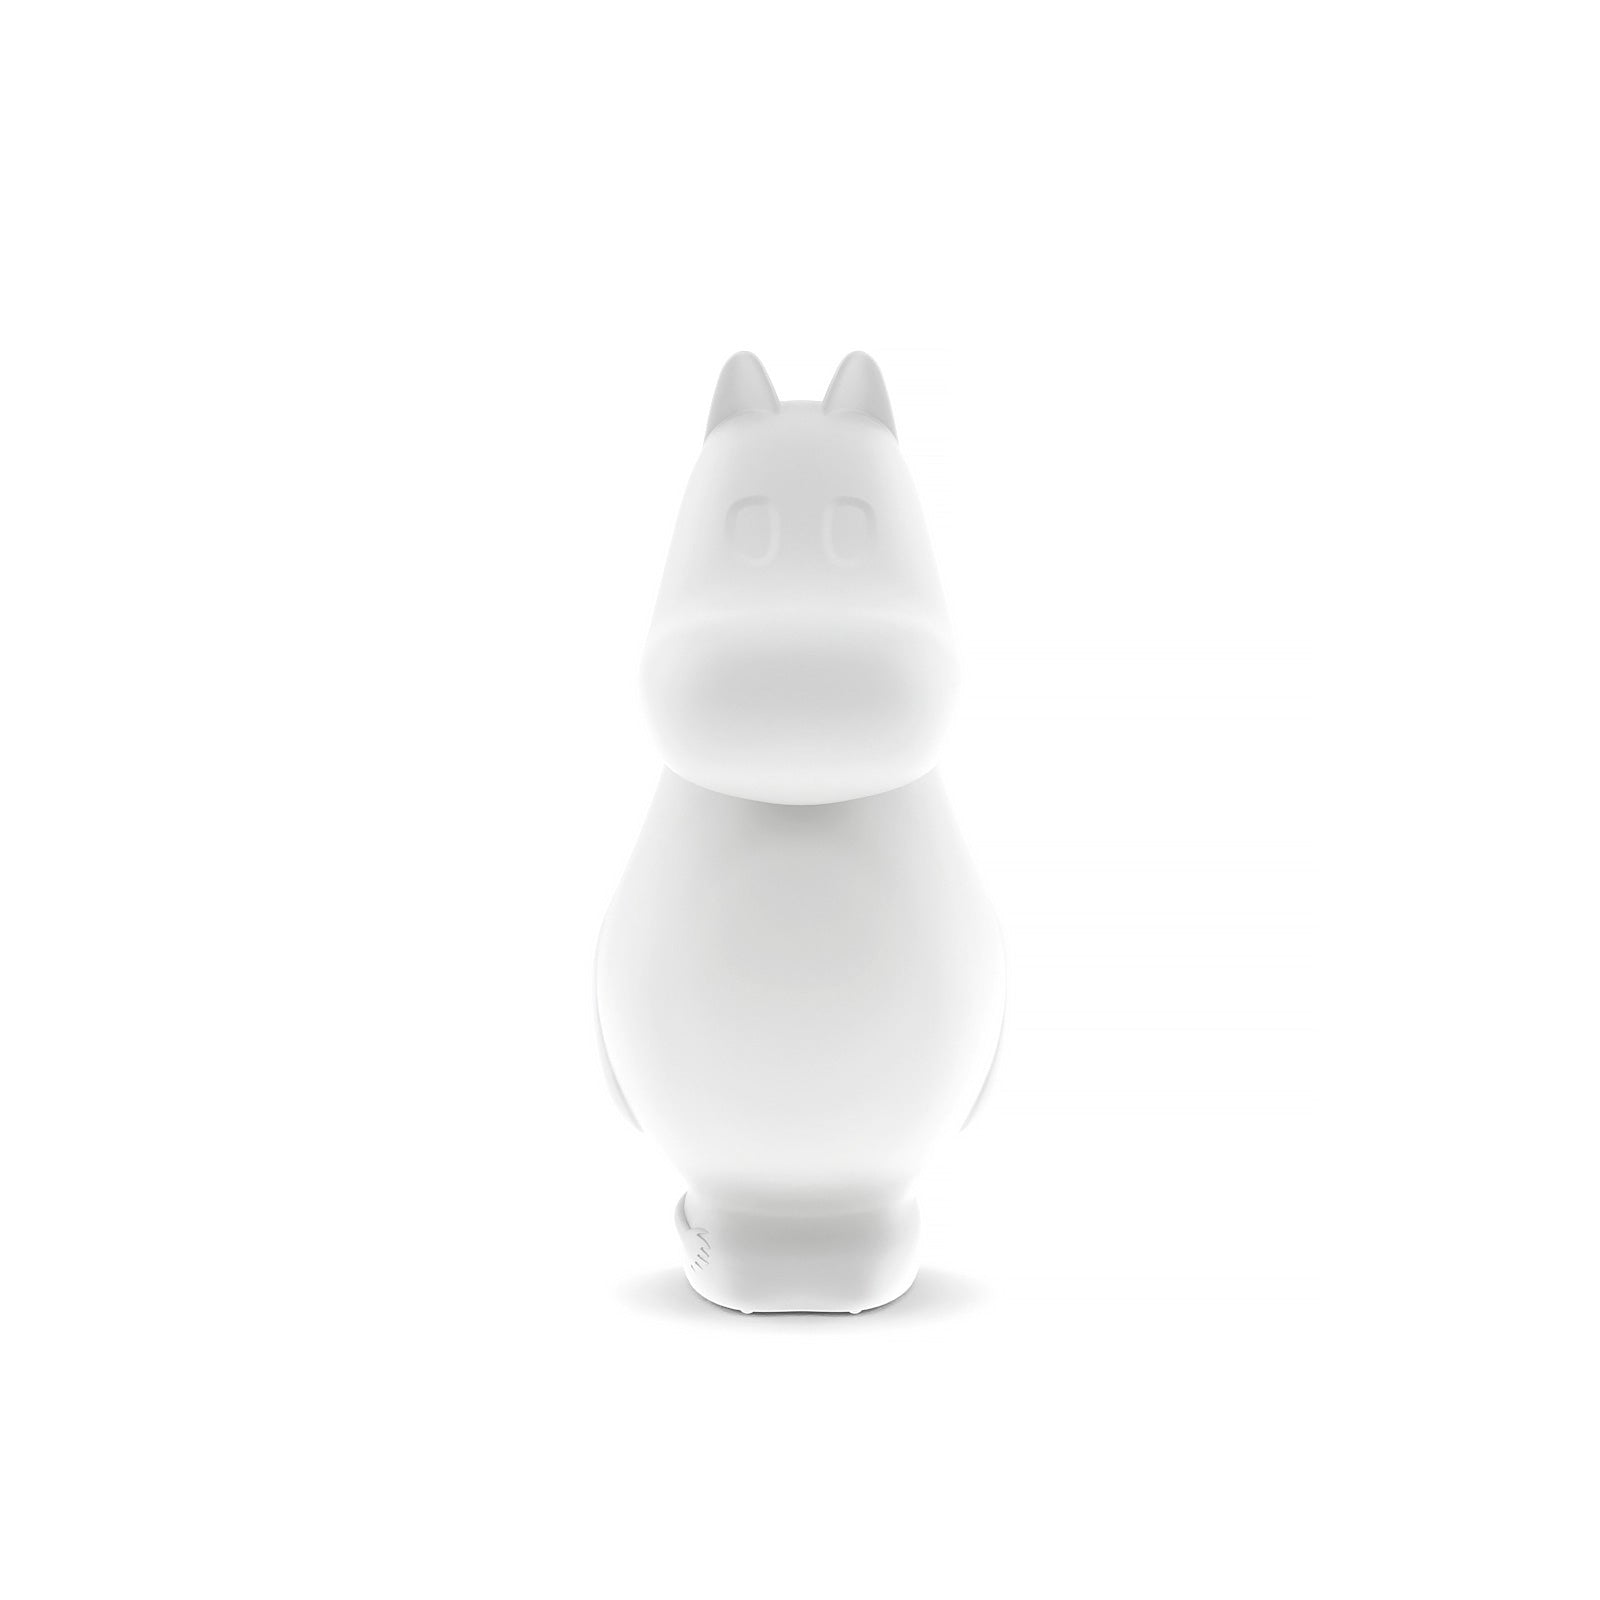 Moomin Light - Muumipeikko S - Moomintroll table lamp